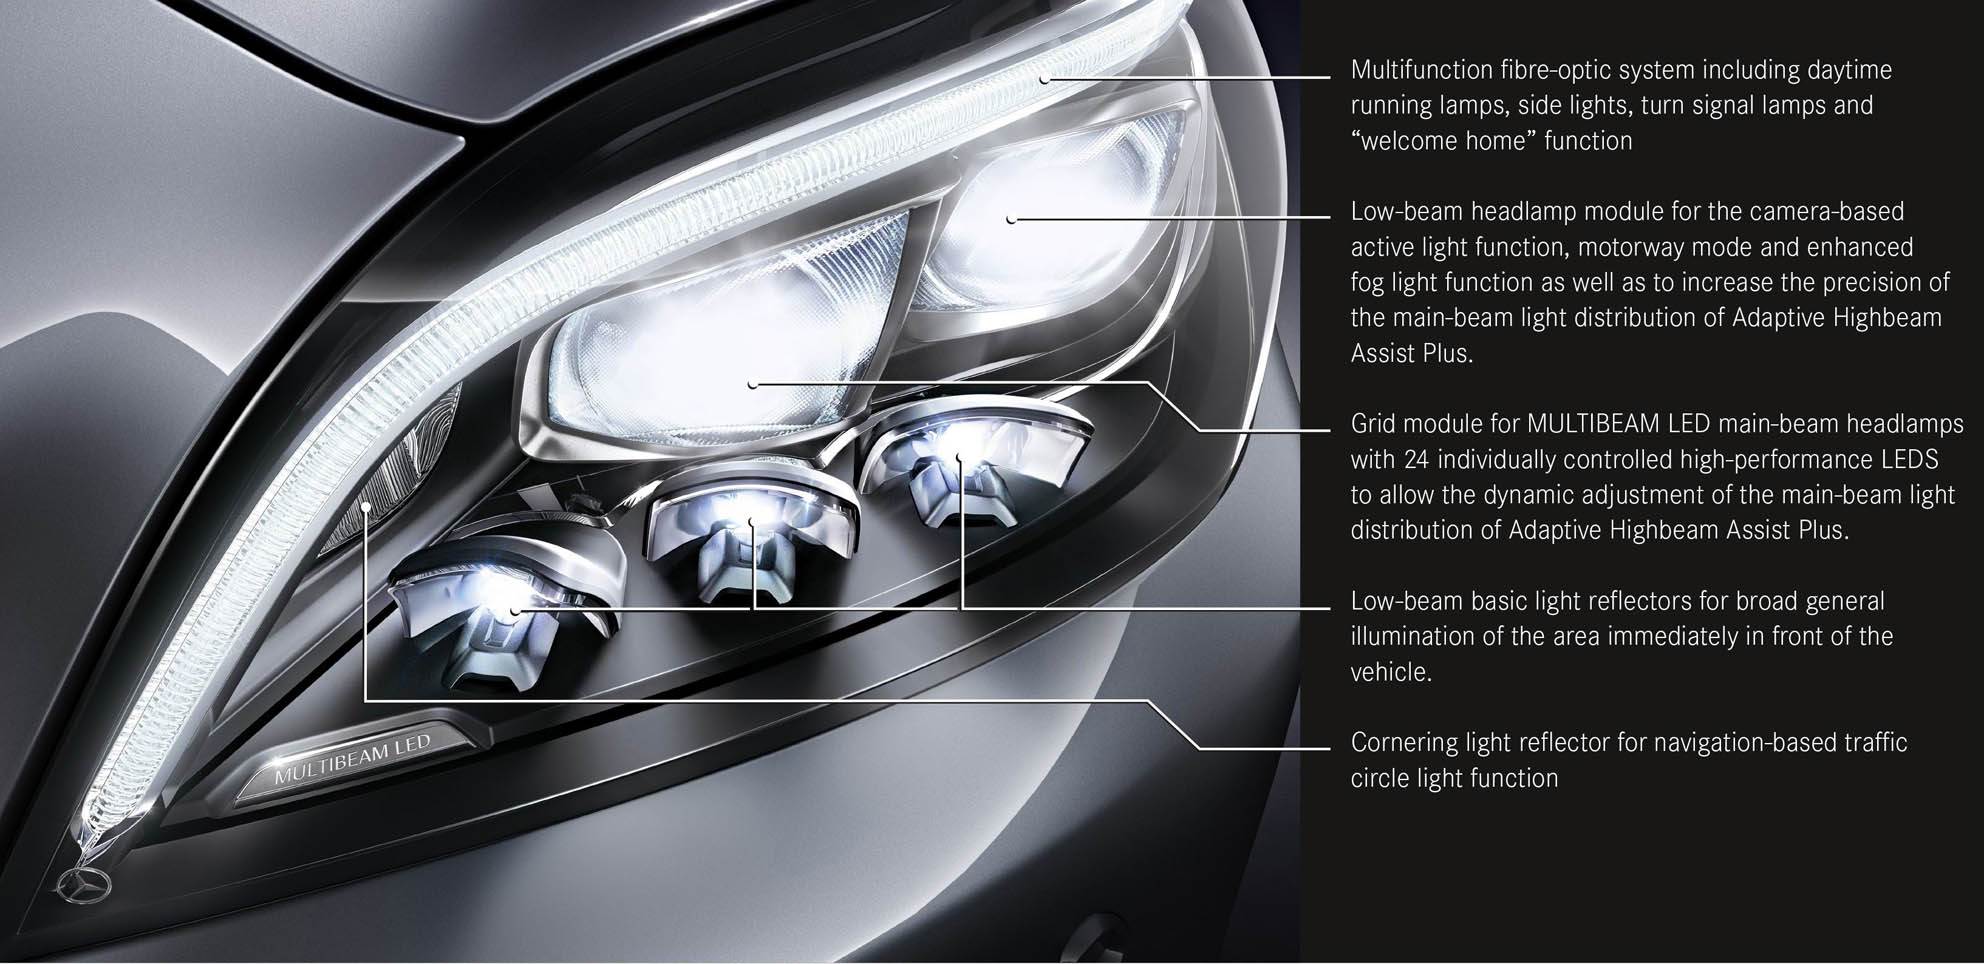 Mercedes-Benz multi-beam LED headlamp tech in new | Autocar Professional